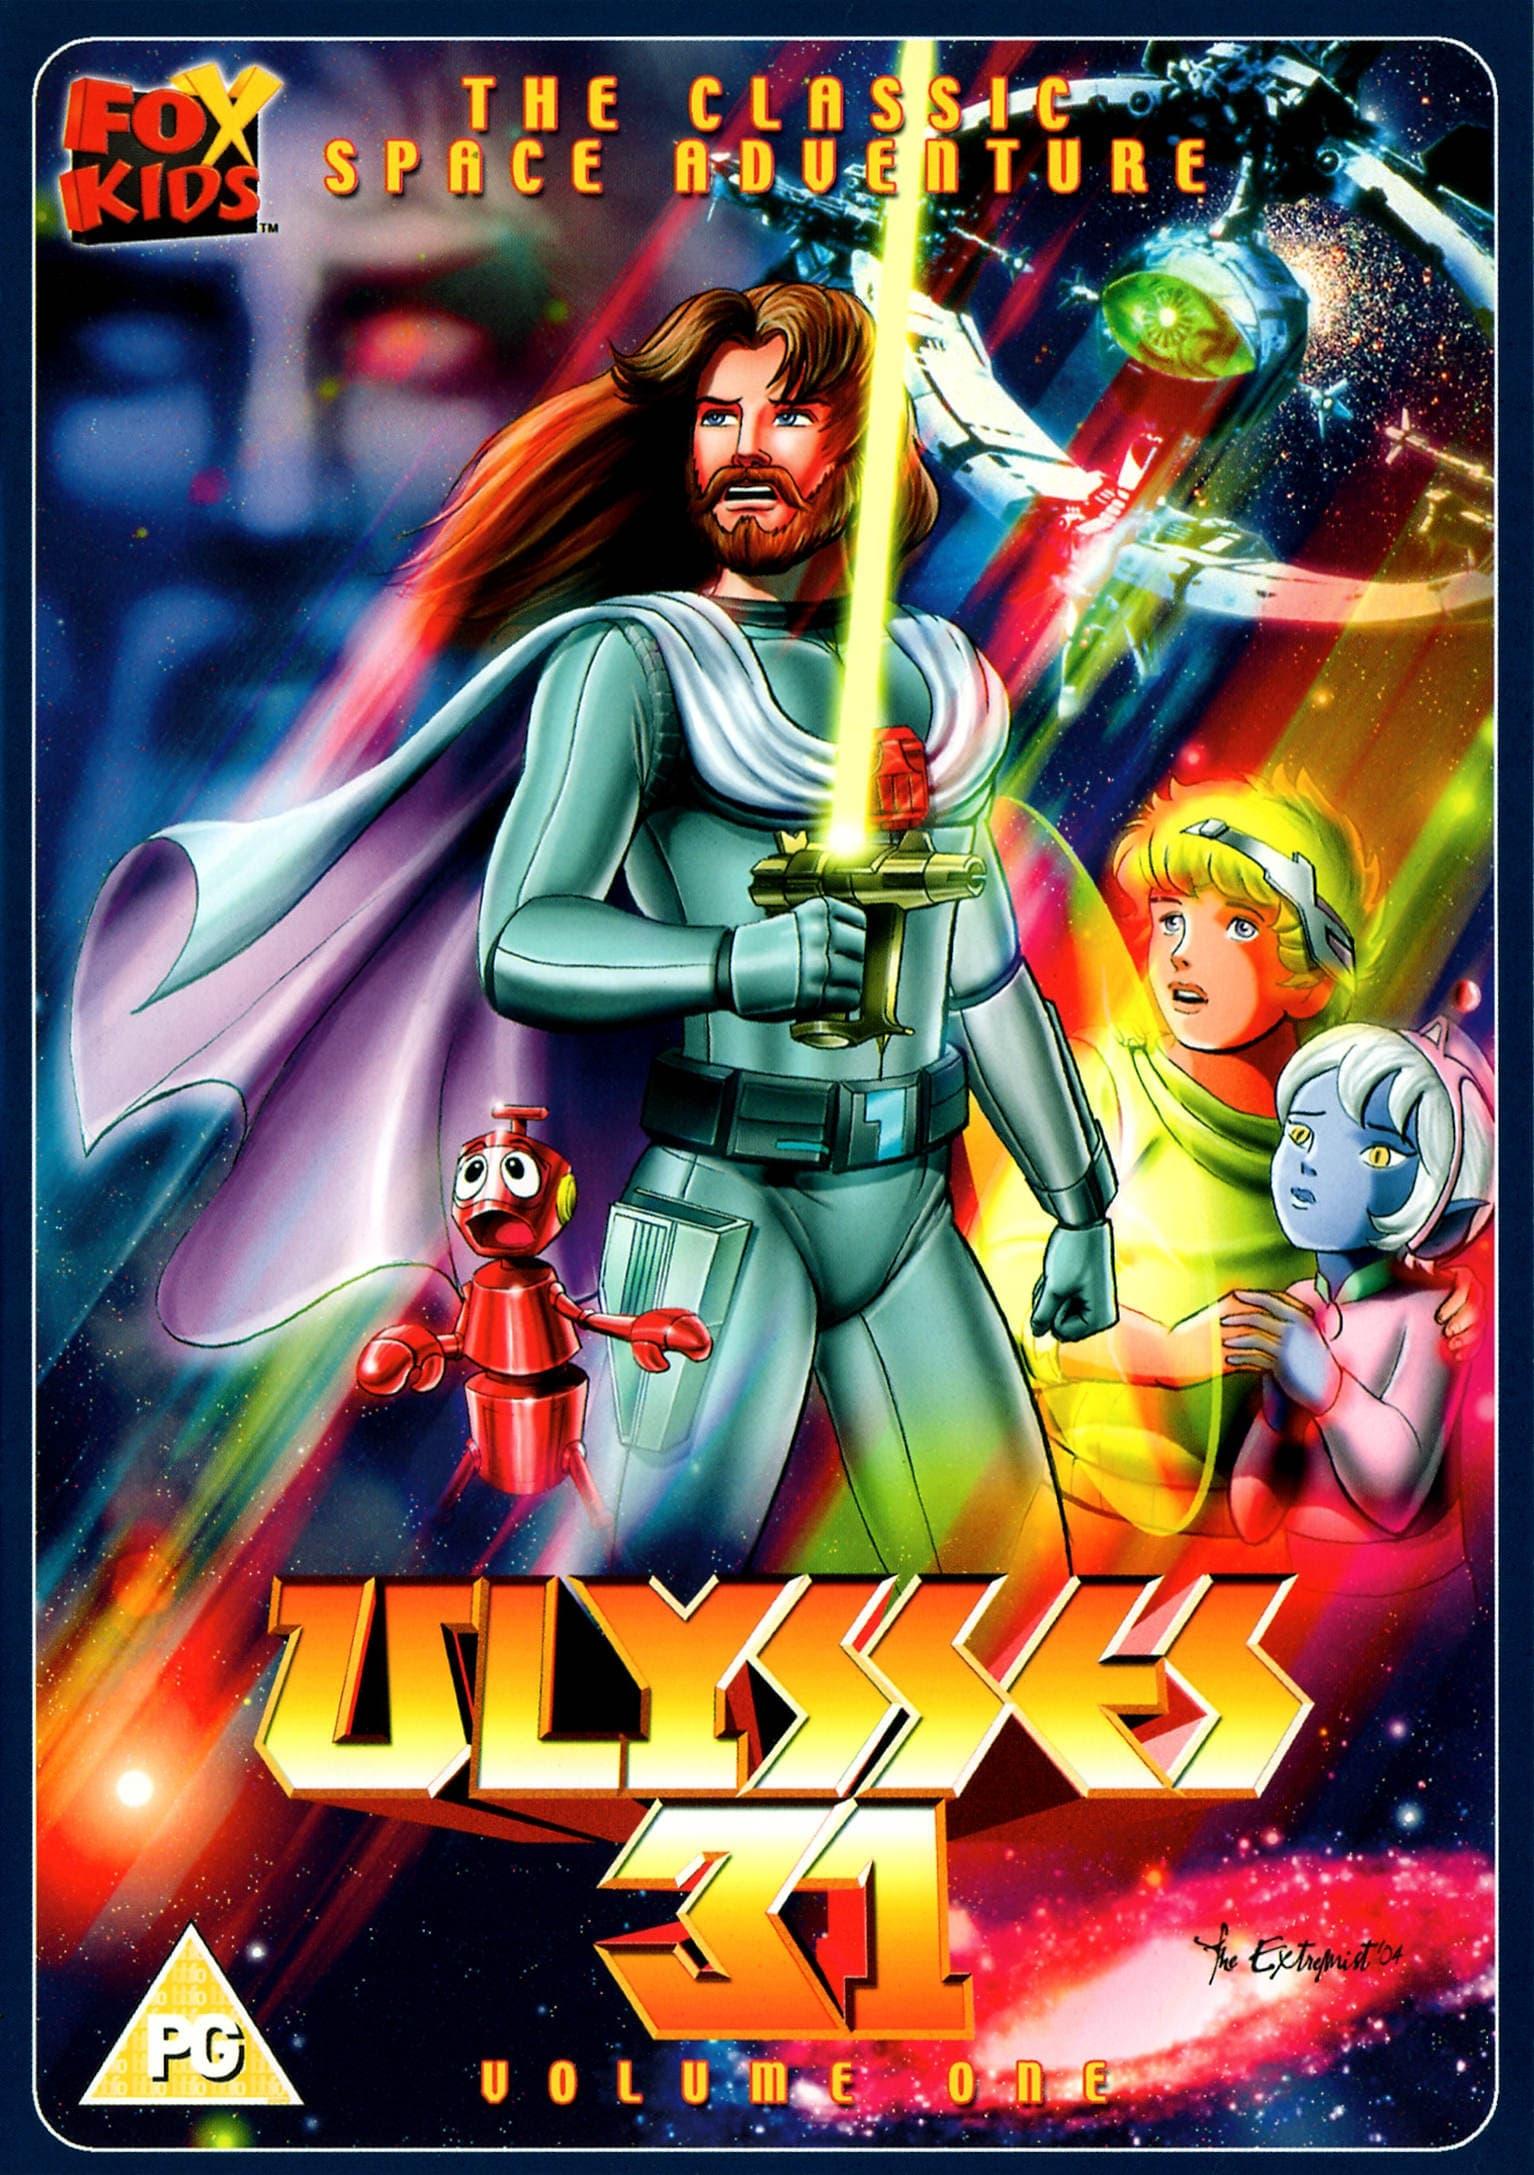 Ulysses 31 poster